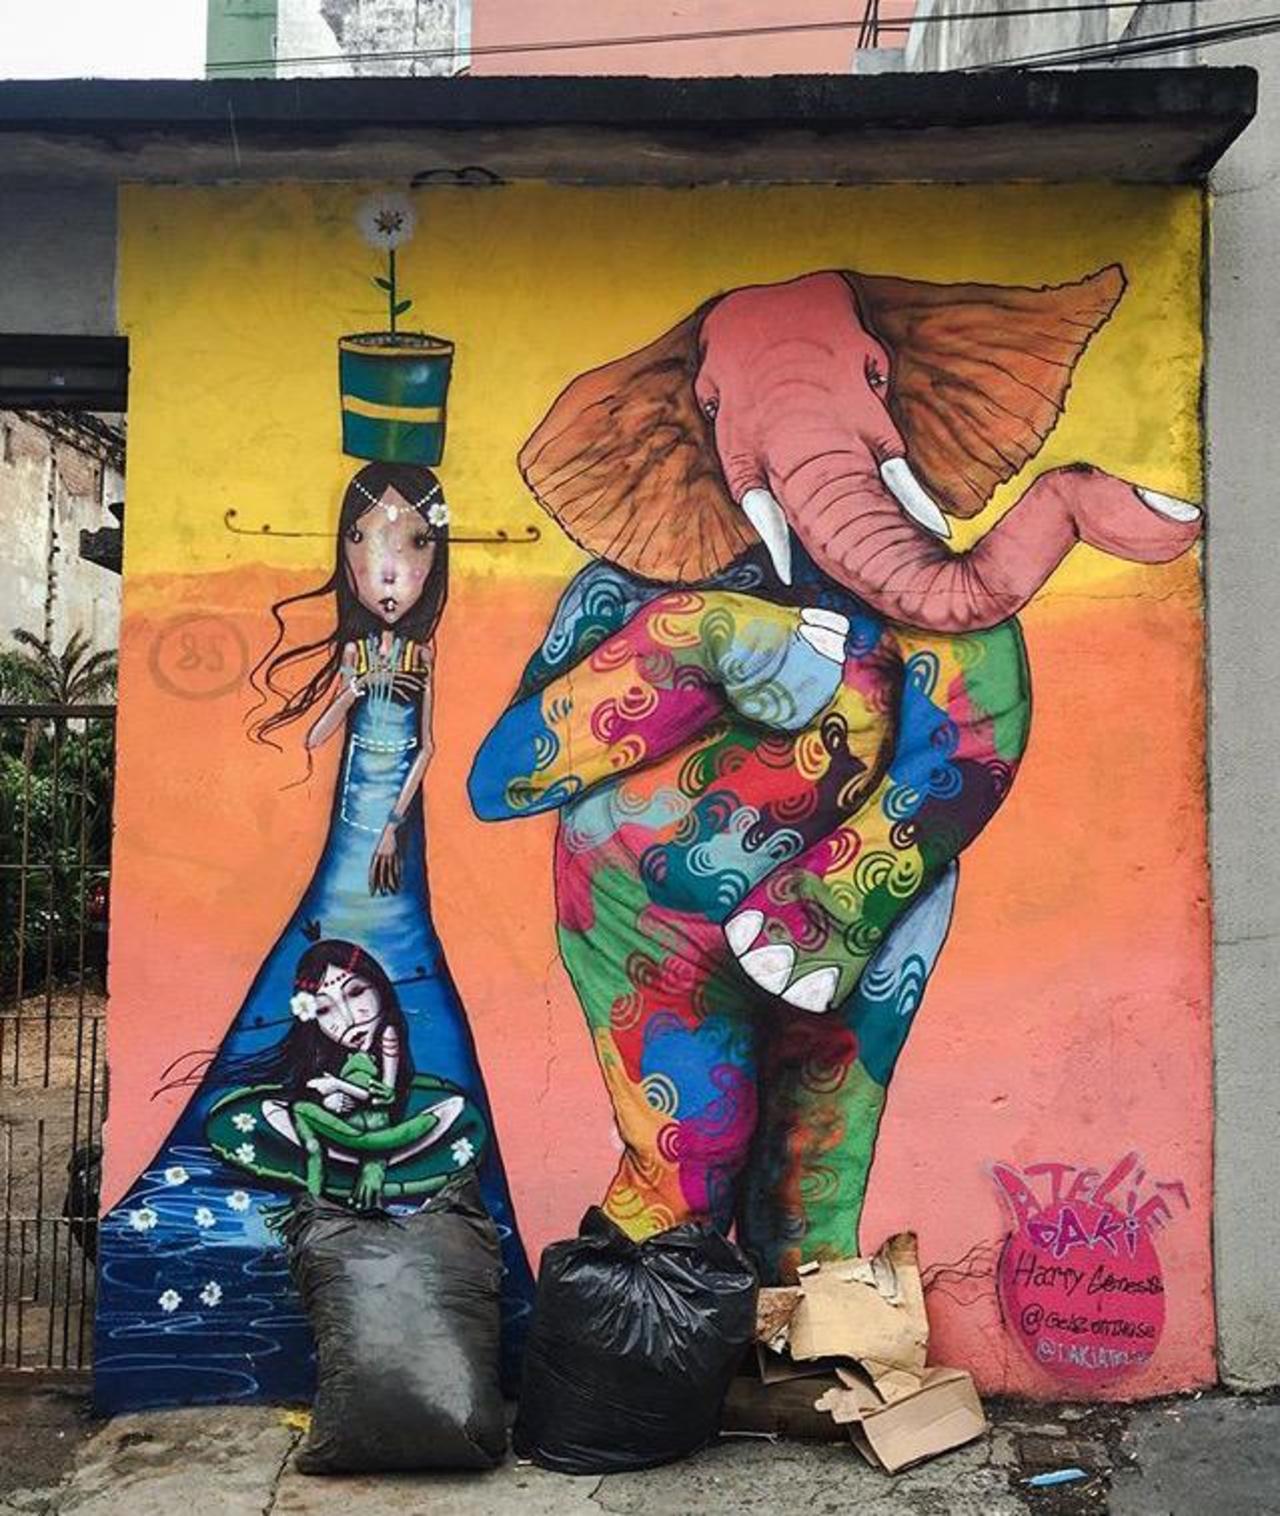 RT belilac "Street Art by Harry Geneis & Gelson in São Paulo 

#art #mural #graffiti #streetart http://t.co/dIwXQB5D9H"